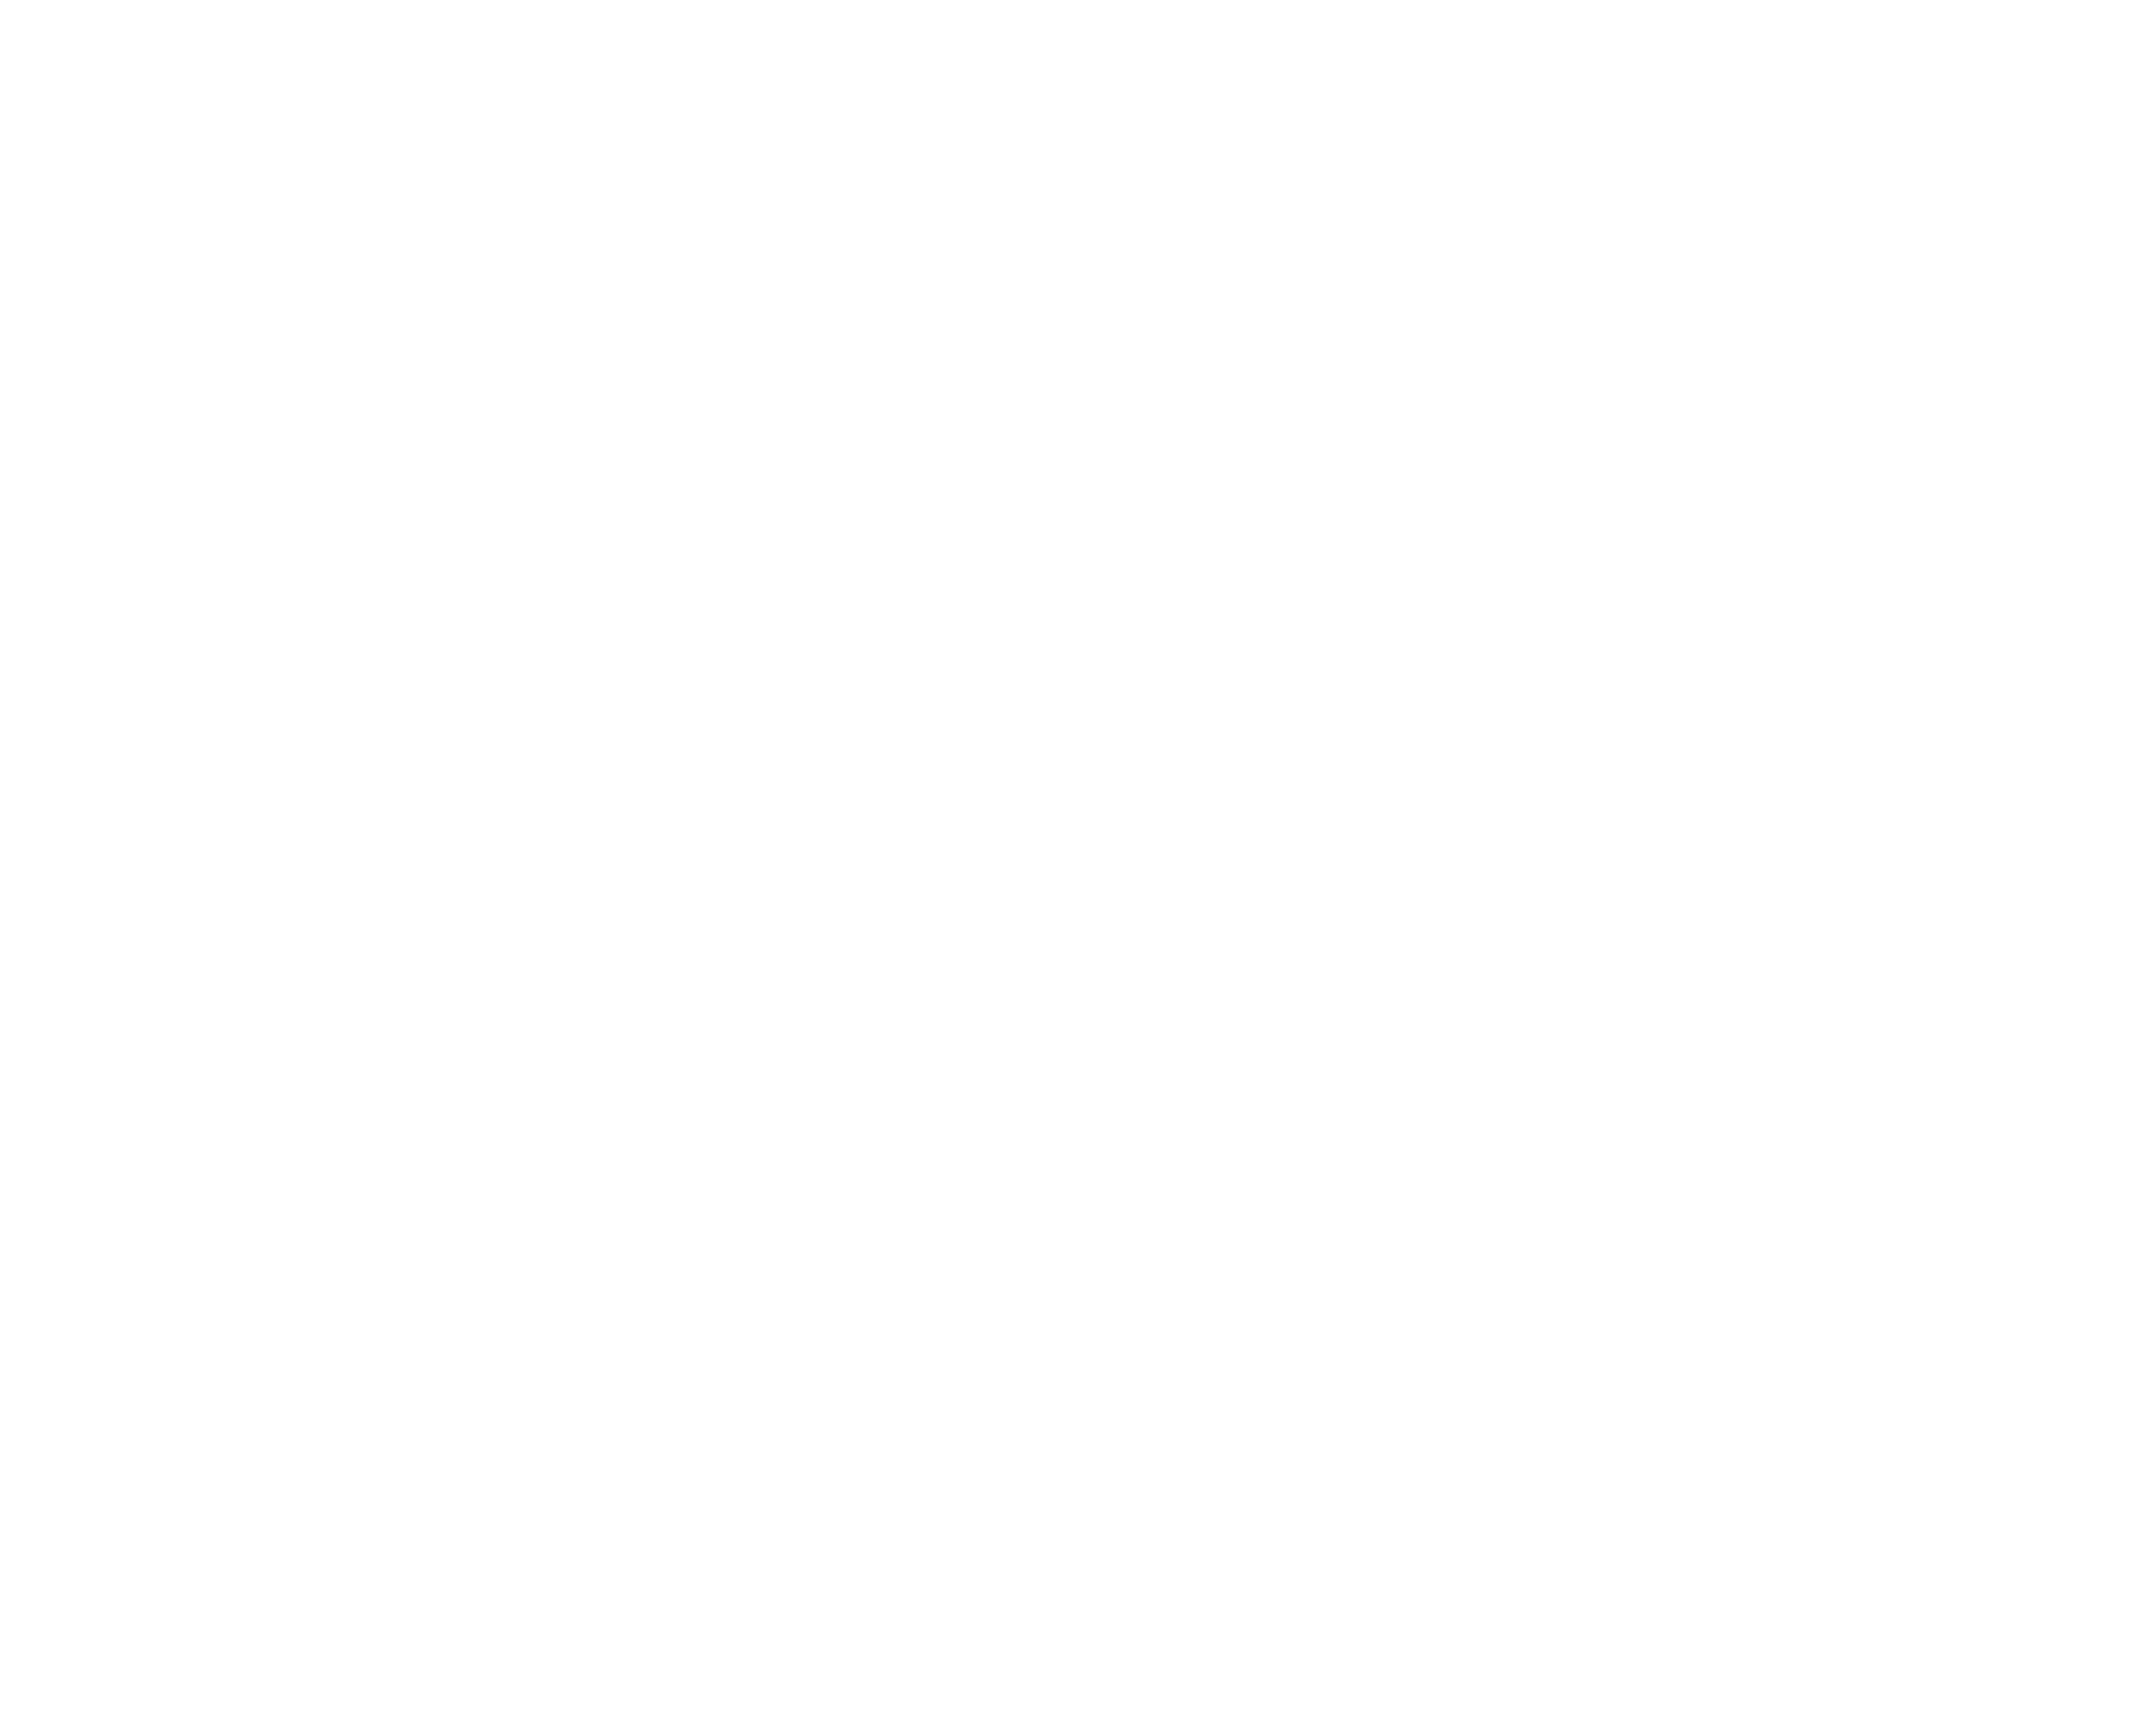 McDonald's South Africa